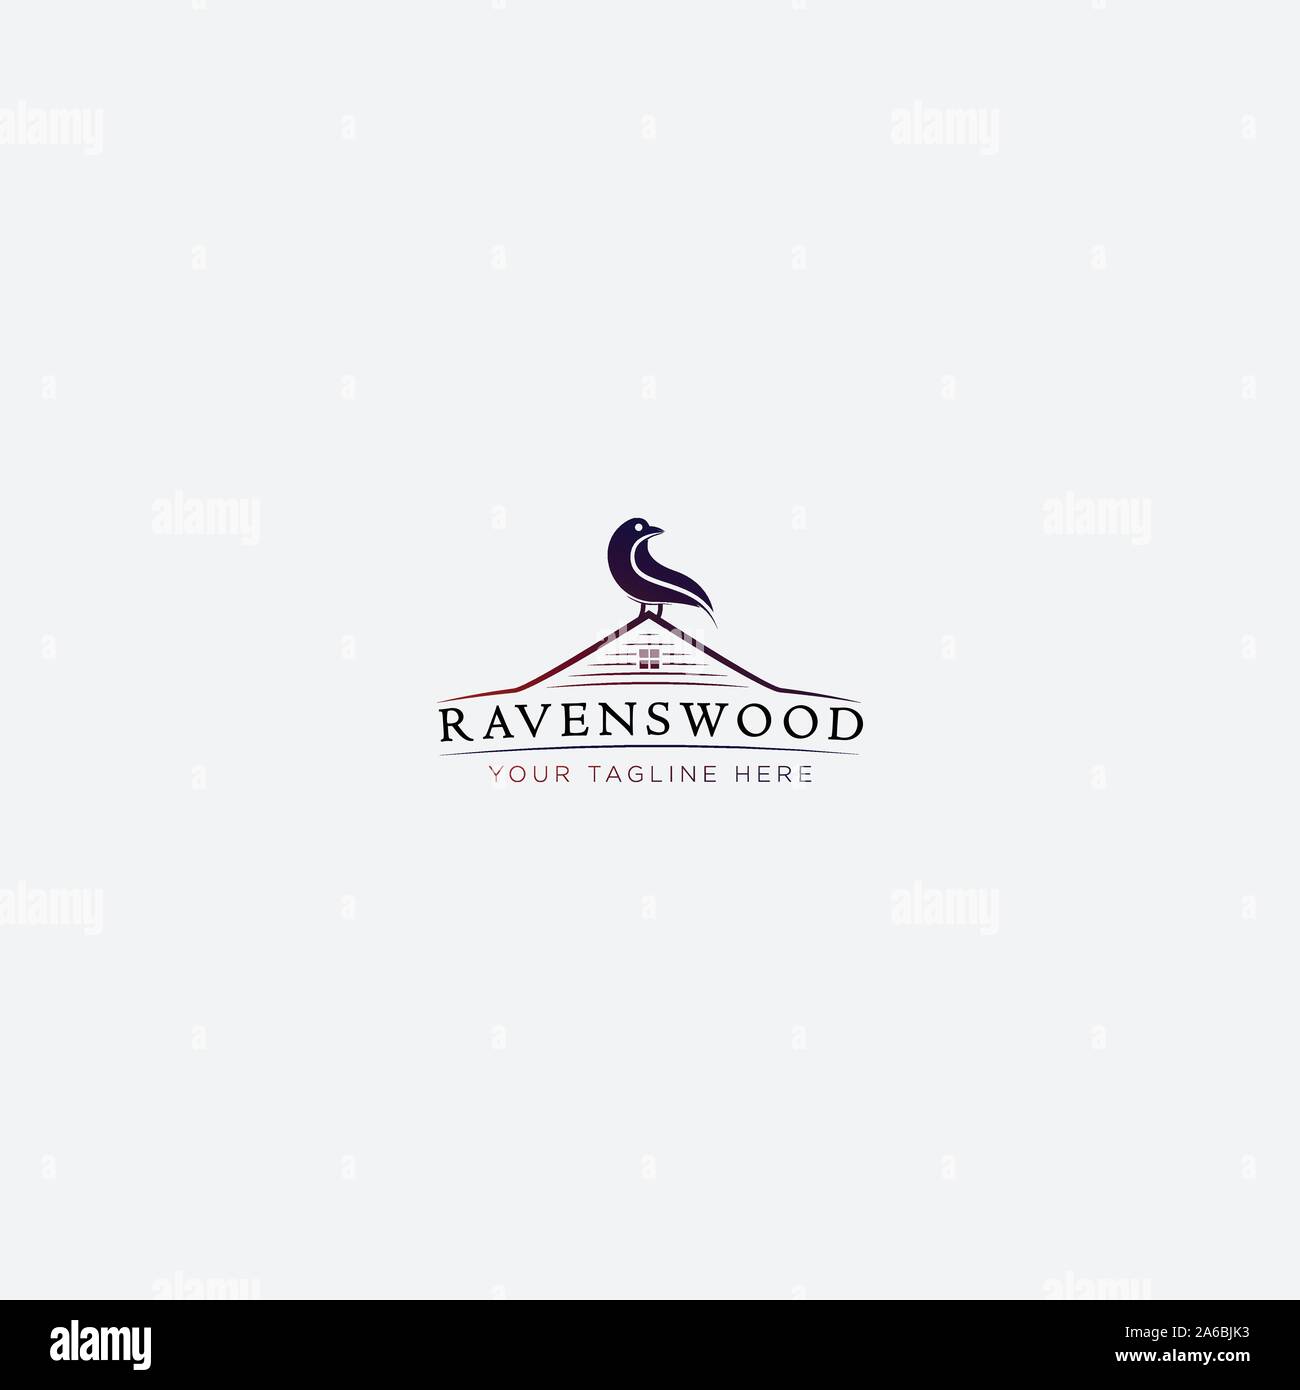 Raven wood and letter R logo design modern Stock Vector